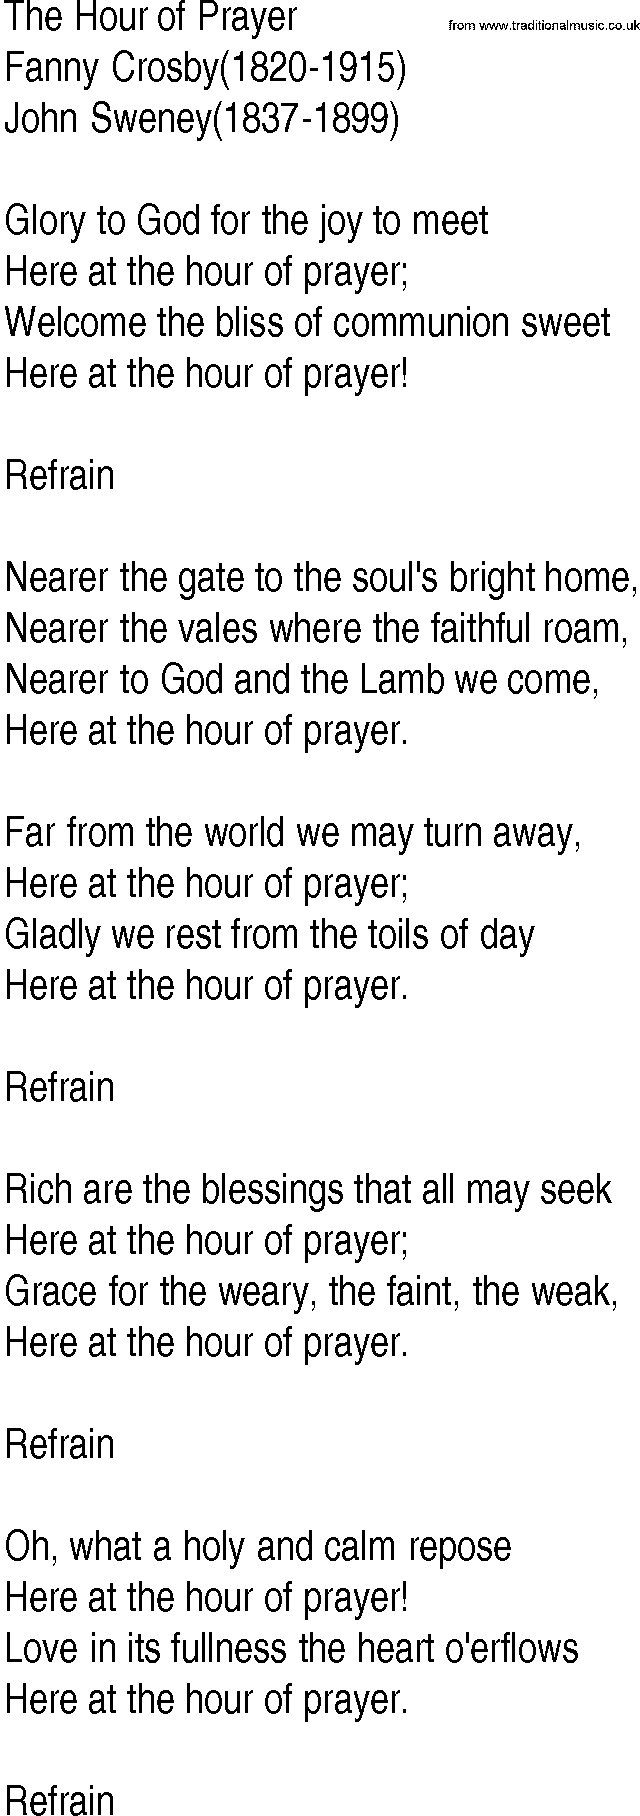 Hymn and Gospel Song: The Hour of Prayer by Fanny Crosby lyrics